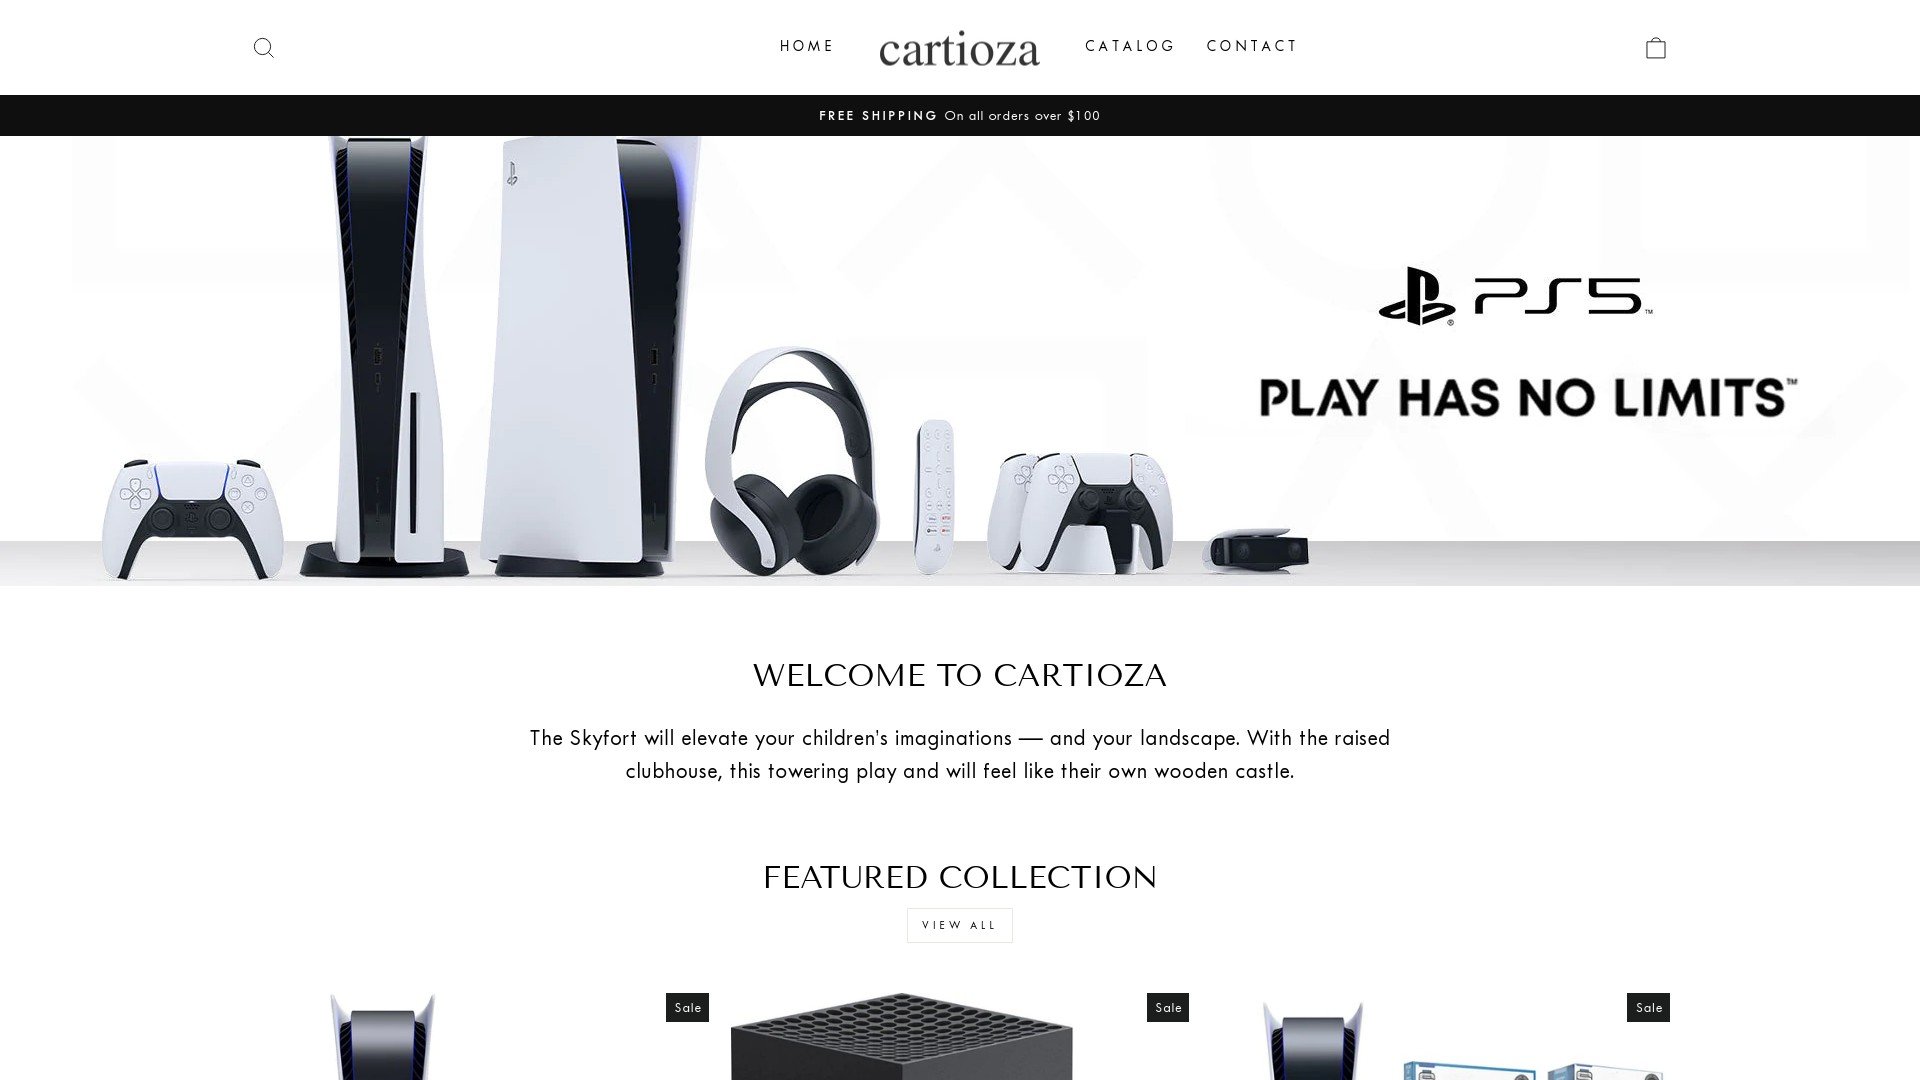 Cartioza at cartioza.com